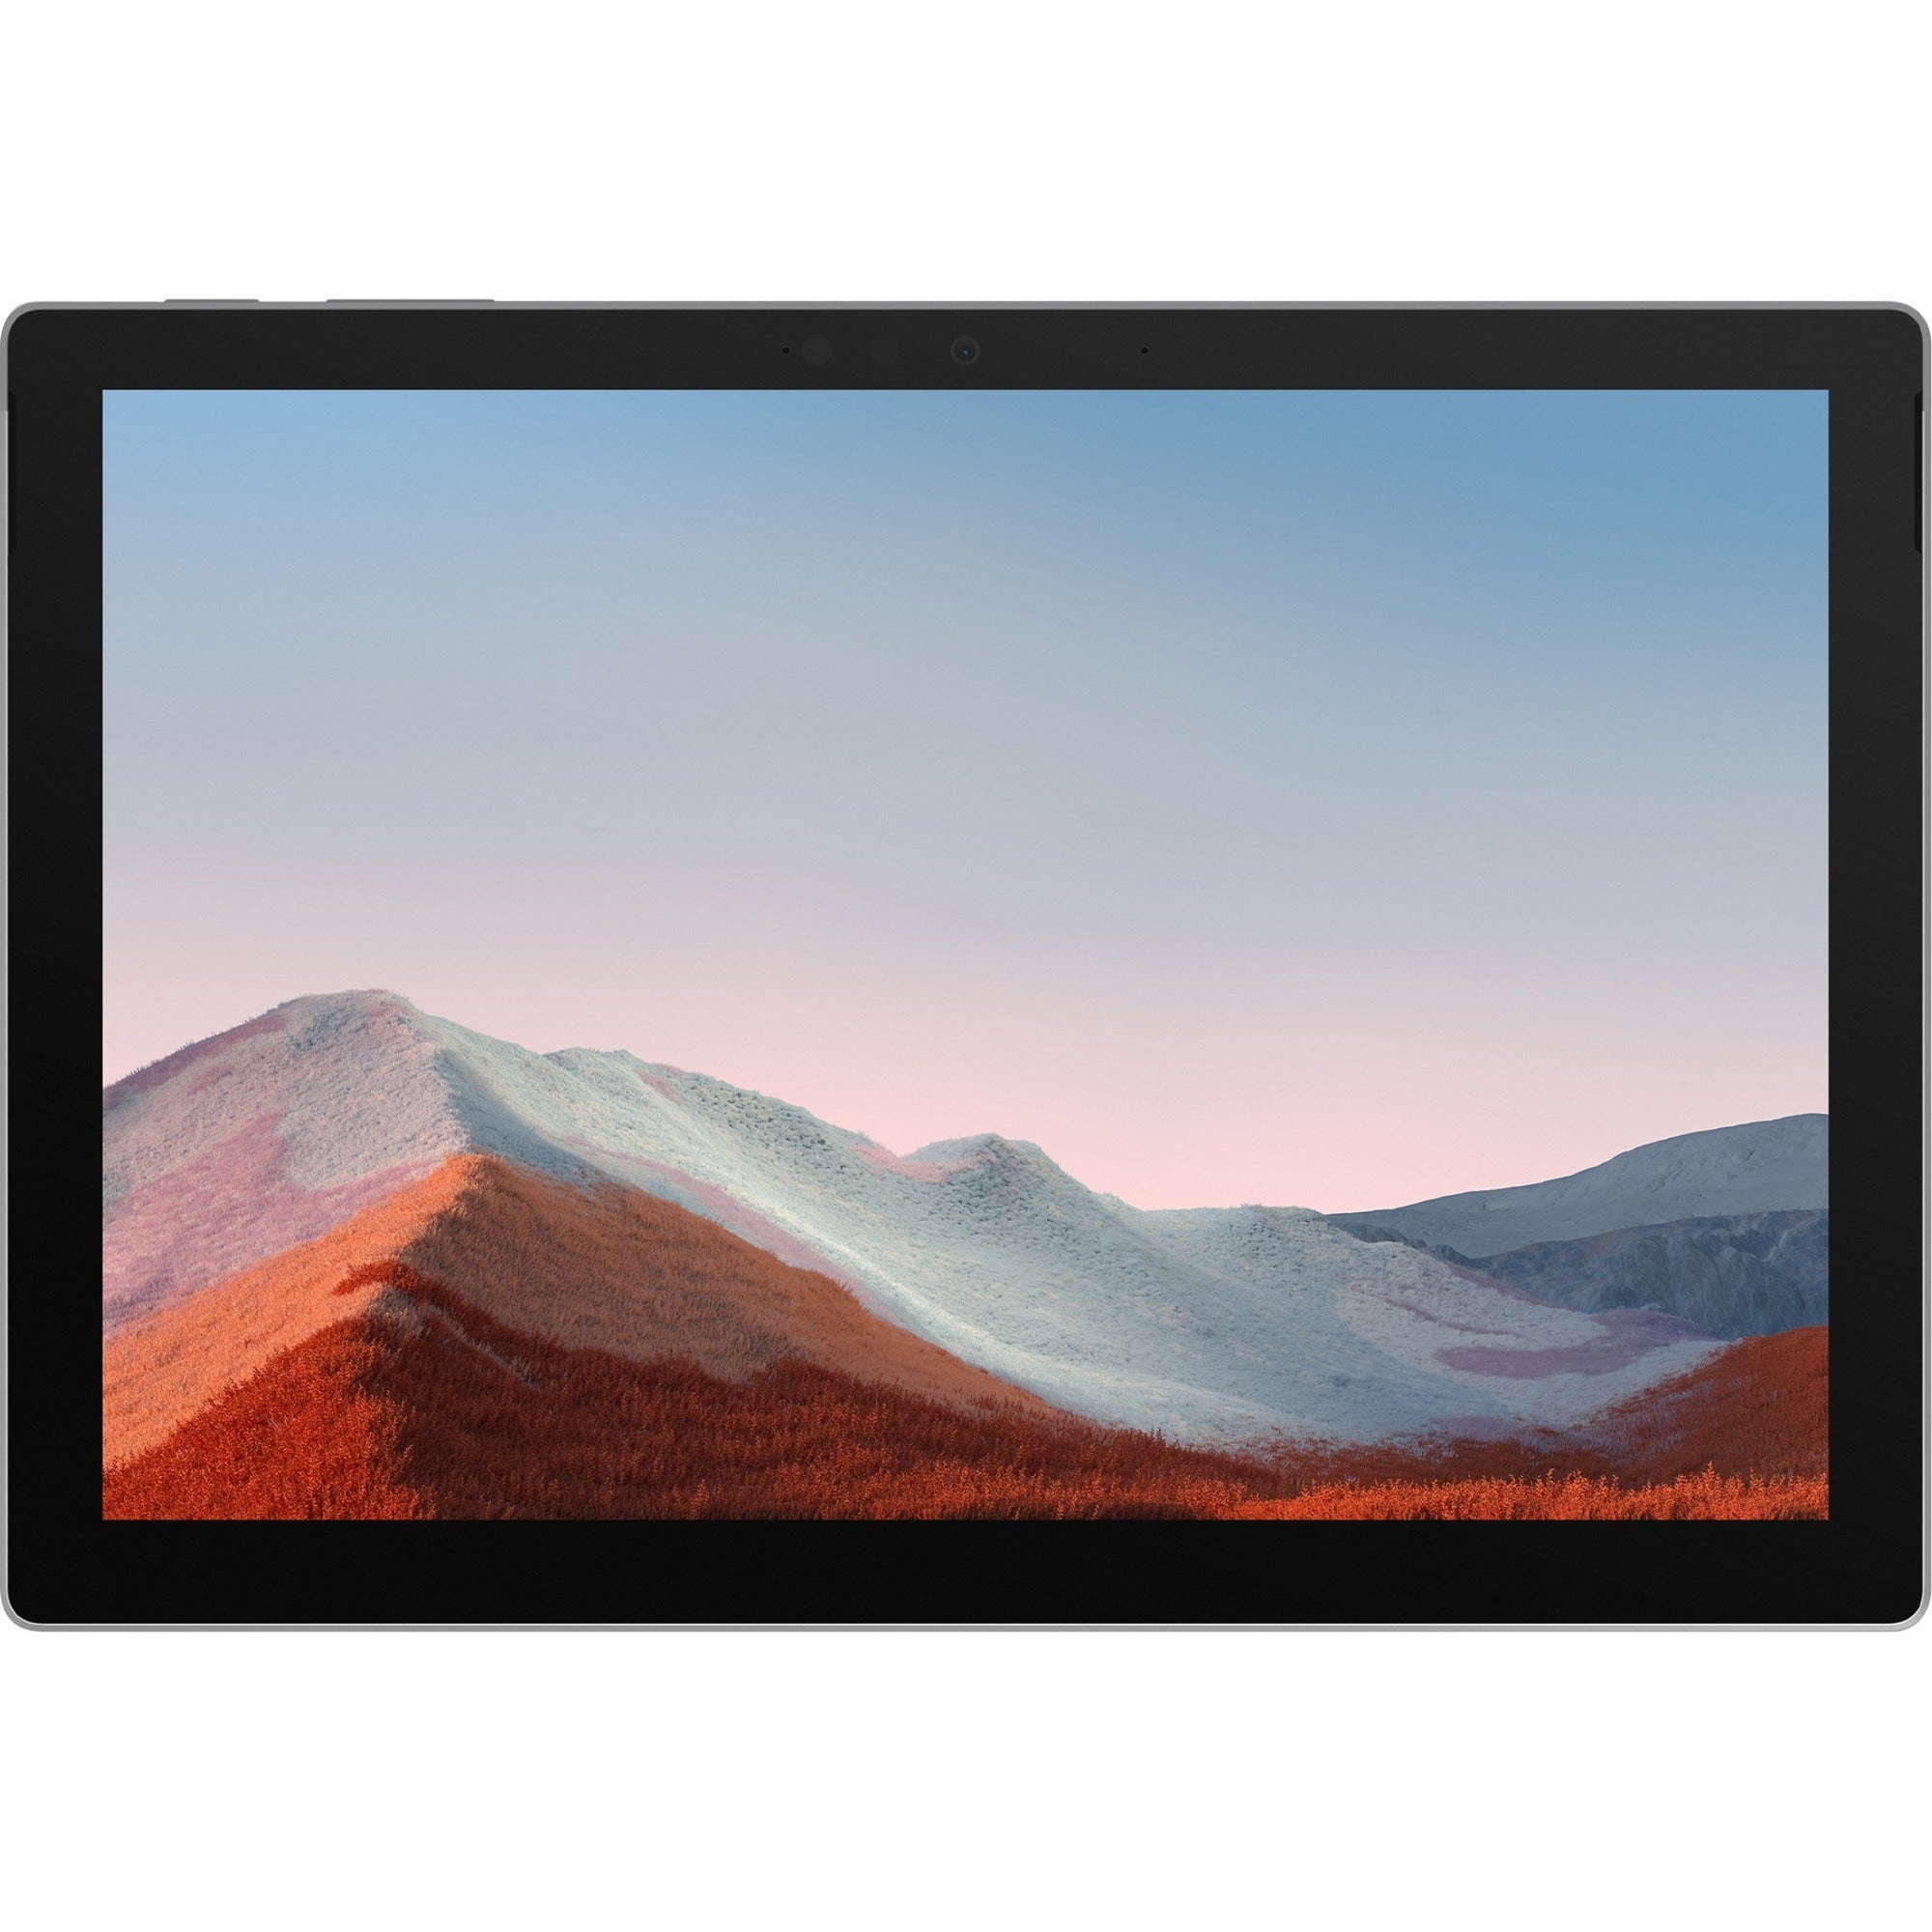 Microsoft Surface Pro 7+ Tablet - 12.3" - Core i5 11th Gen i5-1135G7 Quad-core (4 Core) 4.20 GHz - 8 GB RAM - 128 GB SSD - Windows 10 Pro - 4G - TAA Compliant